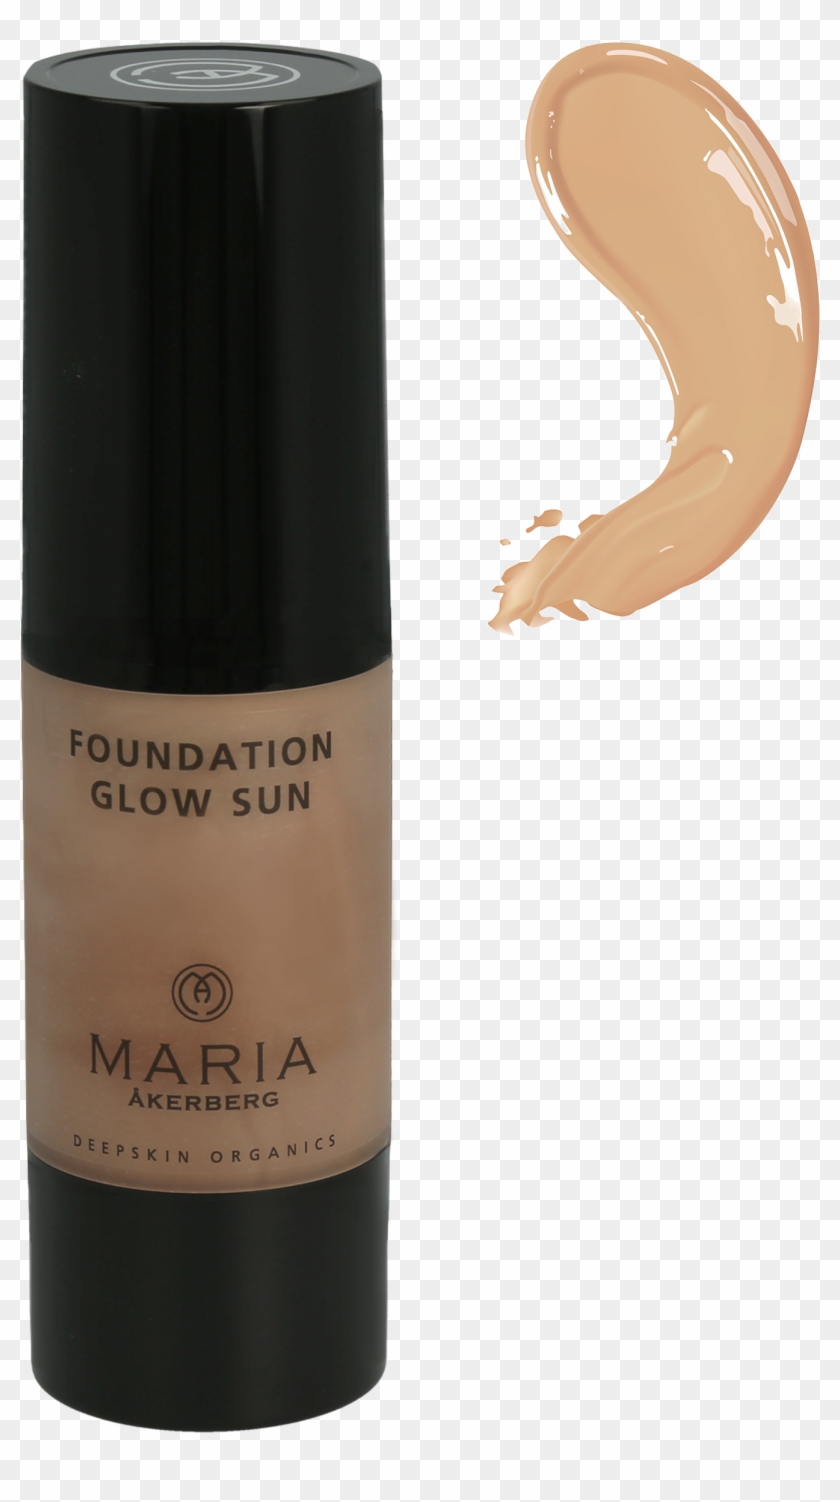 Foundation Glow Sun - Cosmetics Clipart #5712650